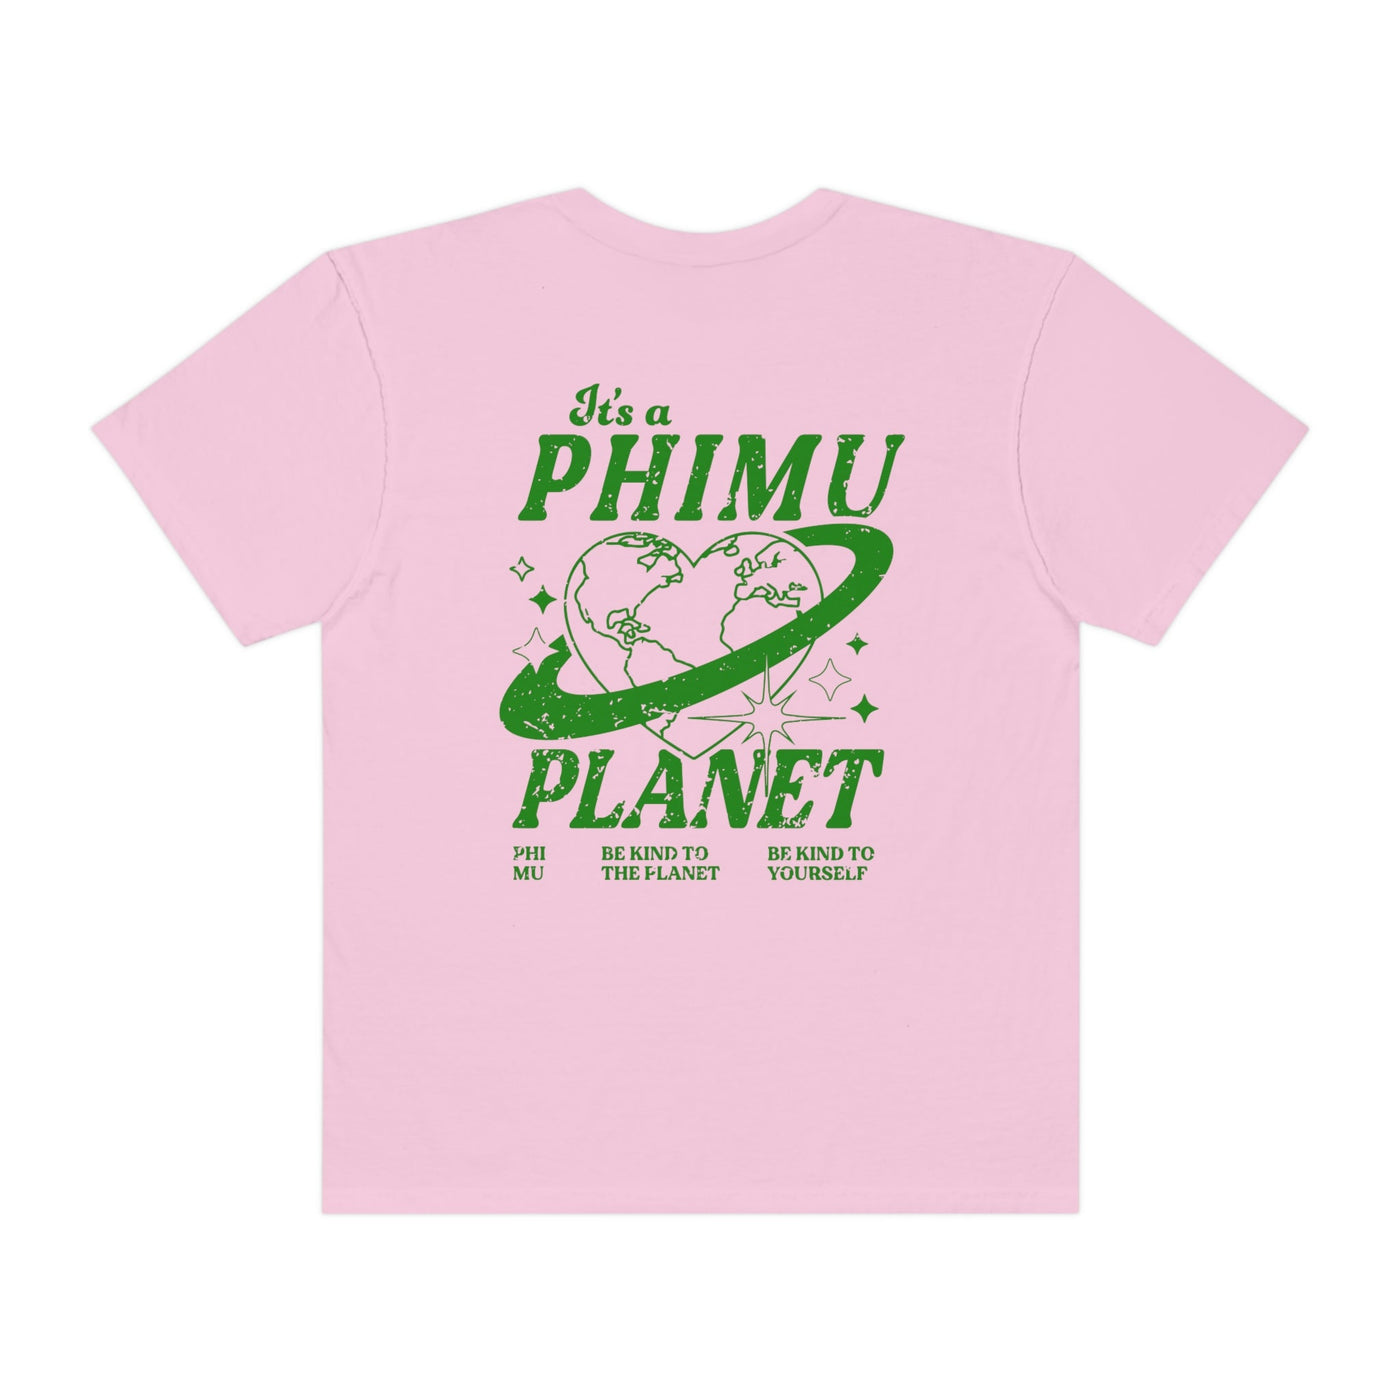 Phi Mu Planet T-shirt | Be Kind to the Planet Trendy Sorority shirt